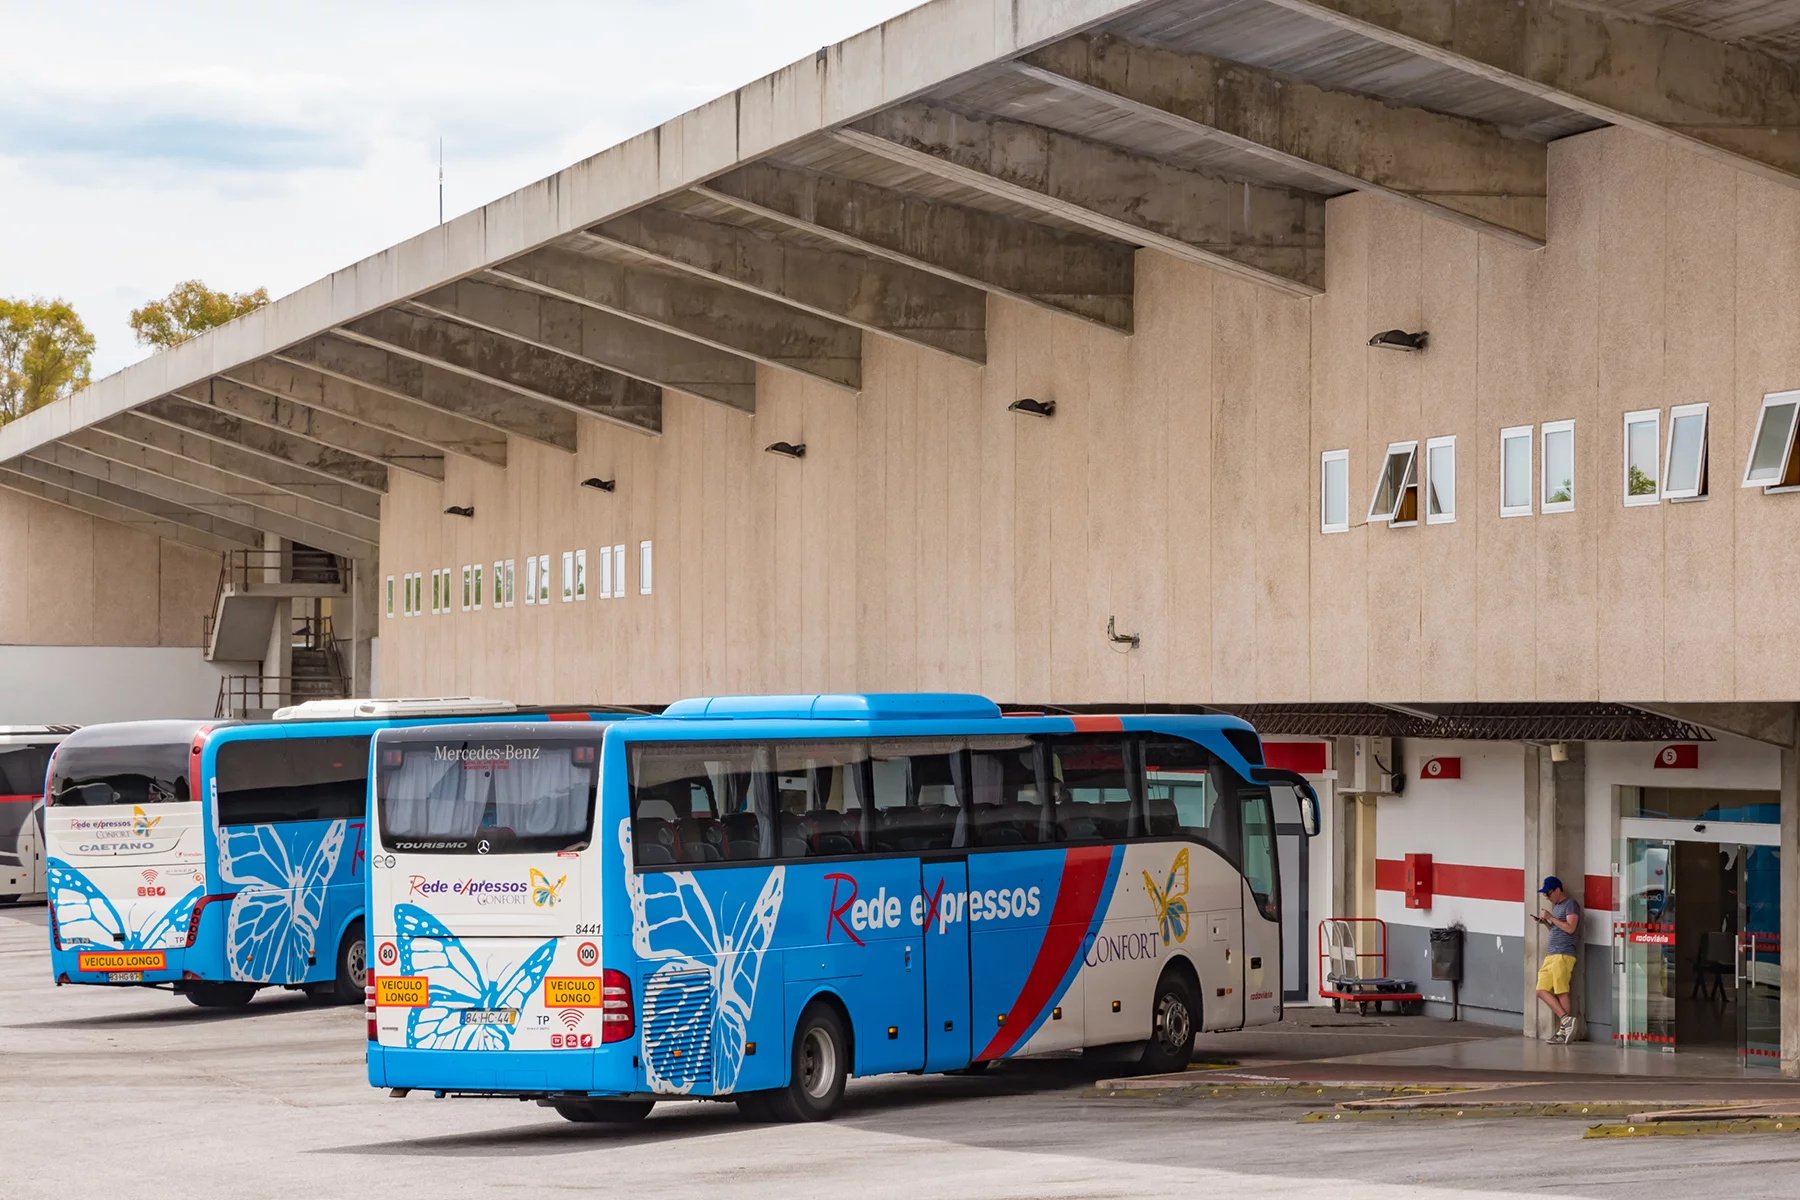 Rede buses in Evora